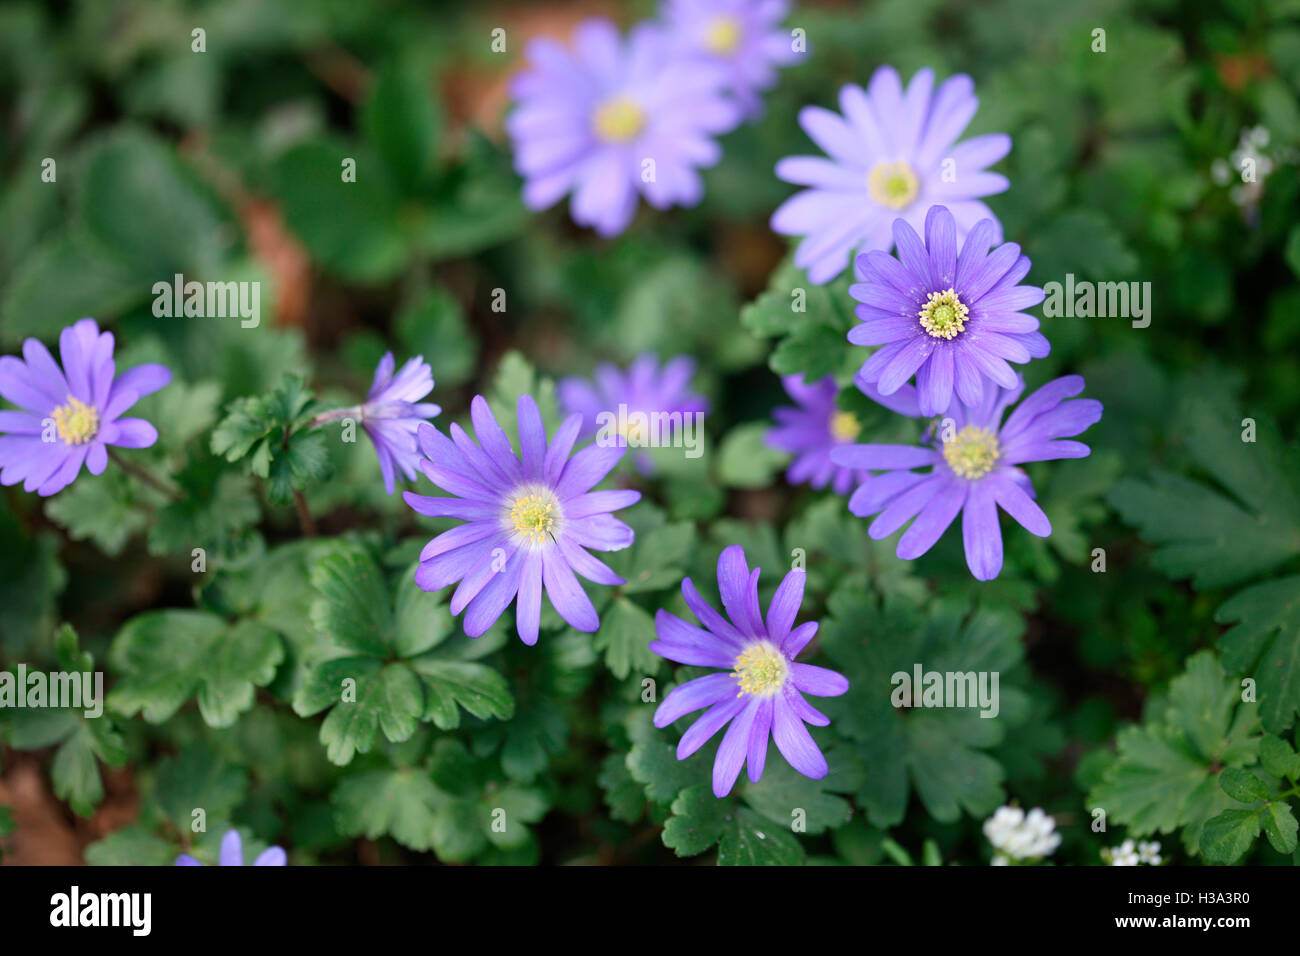 blue blanda, beautiful daisy-like Spring flowers Jane Ann Butler Photography JABP1644 Stock Photo